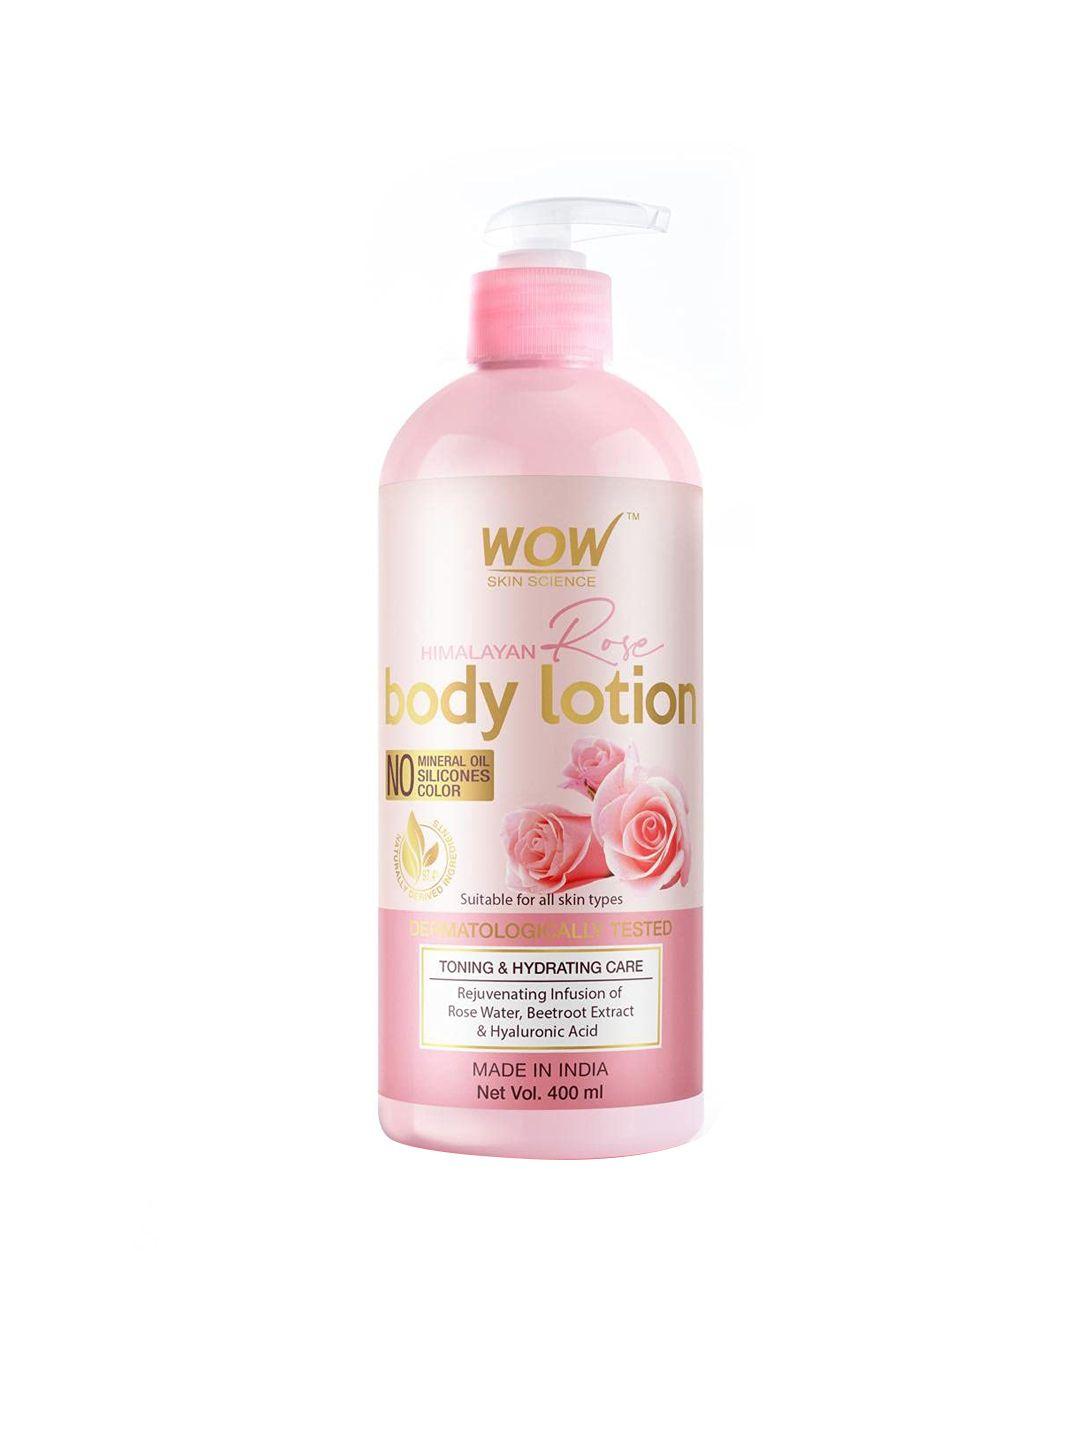 wow skin science himalayan rose body lotion - toning & hydrating 400 ml